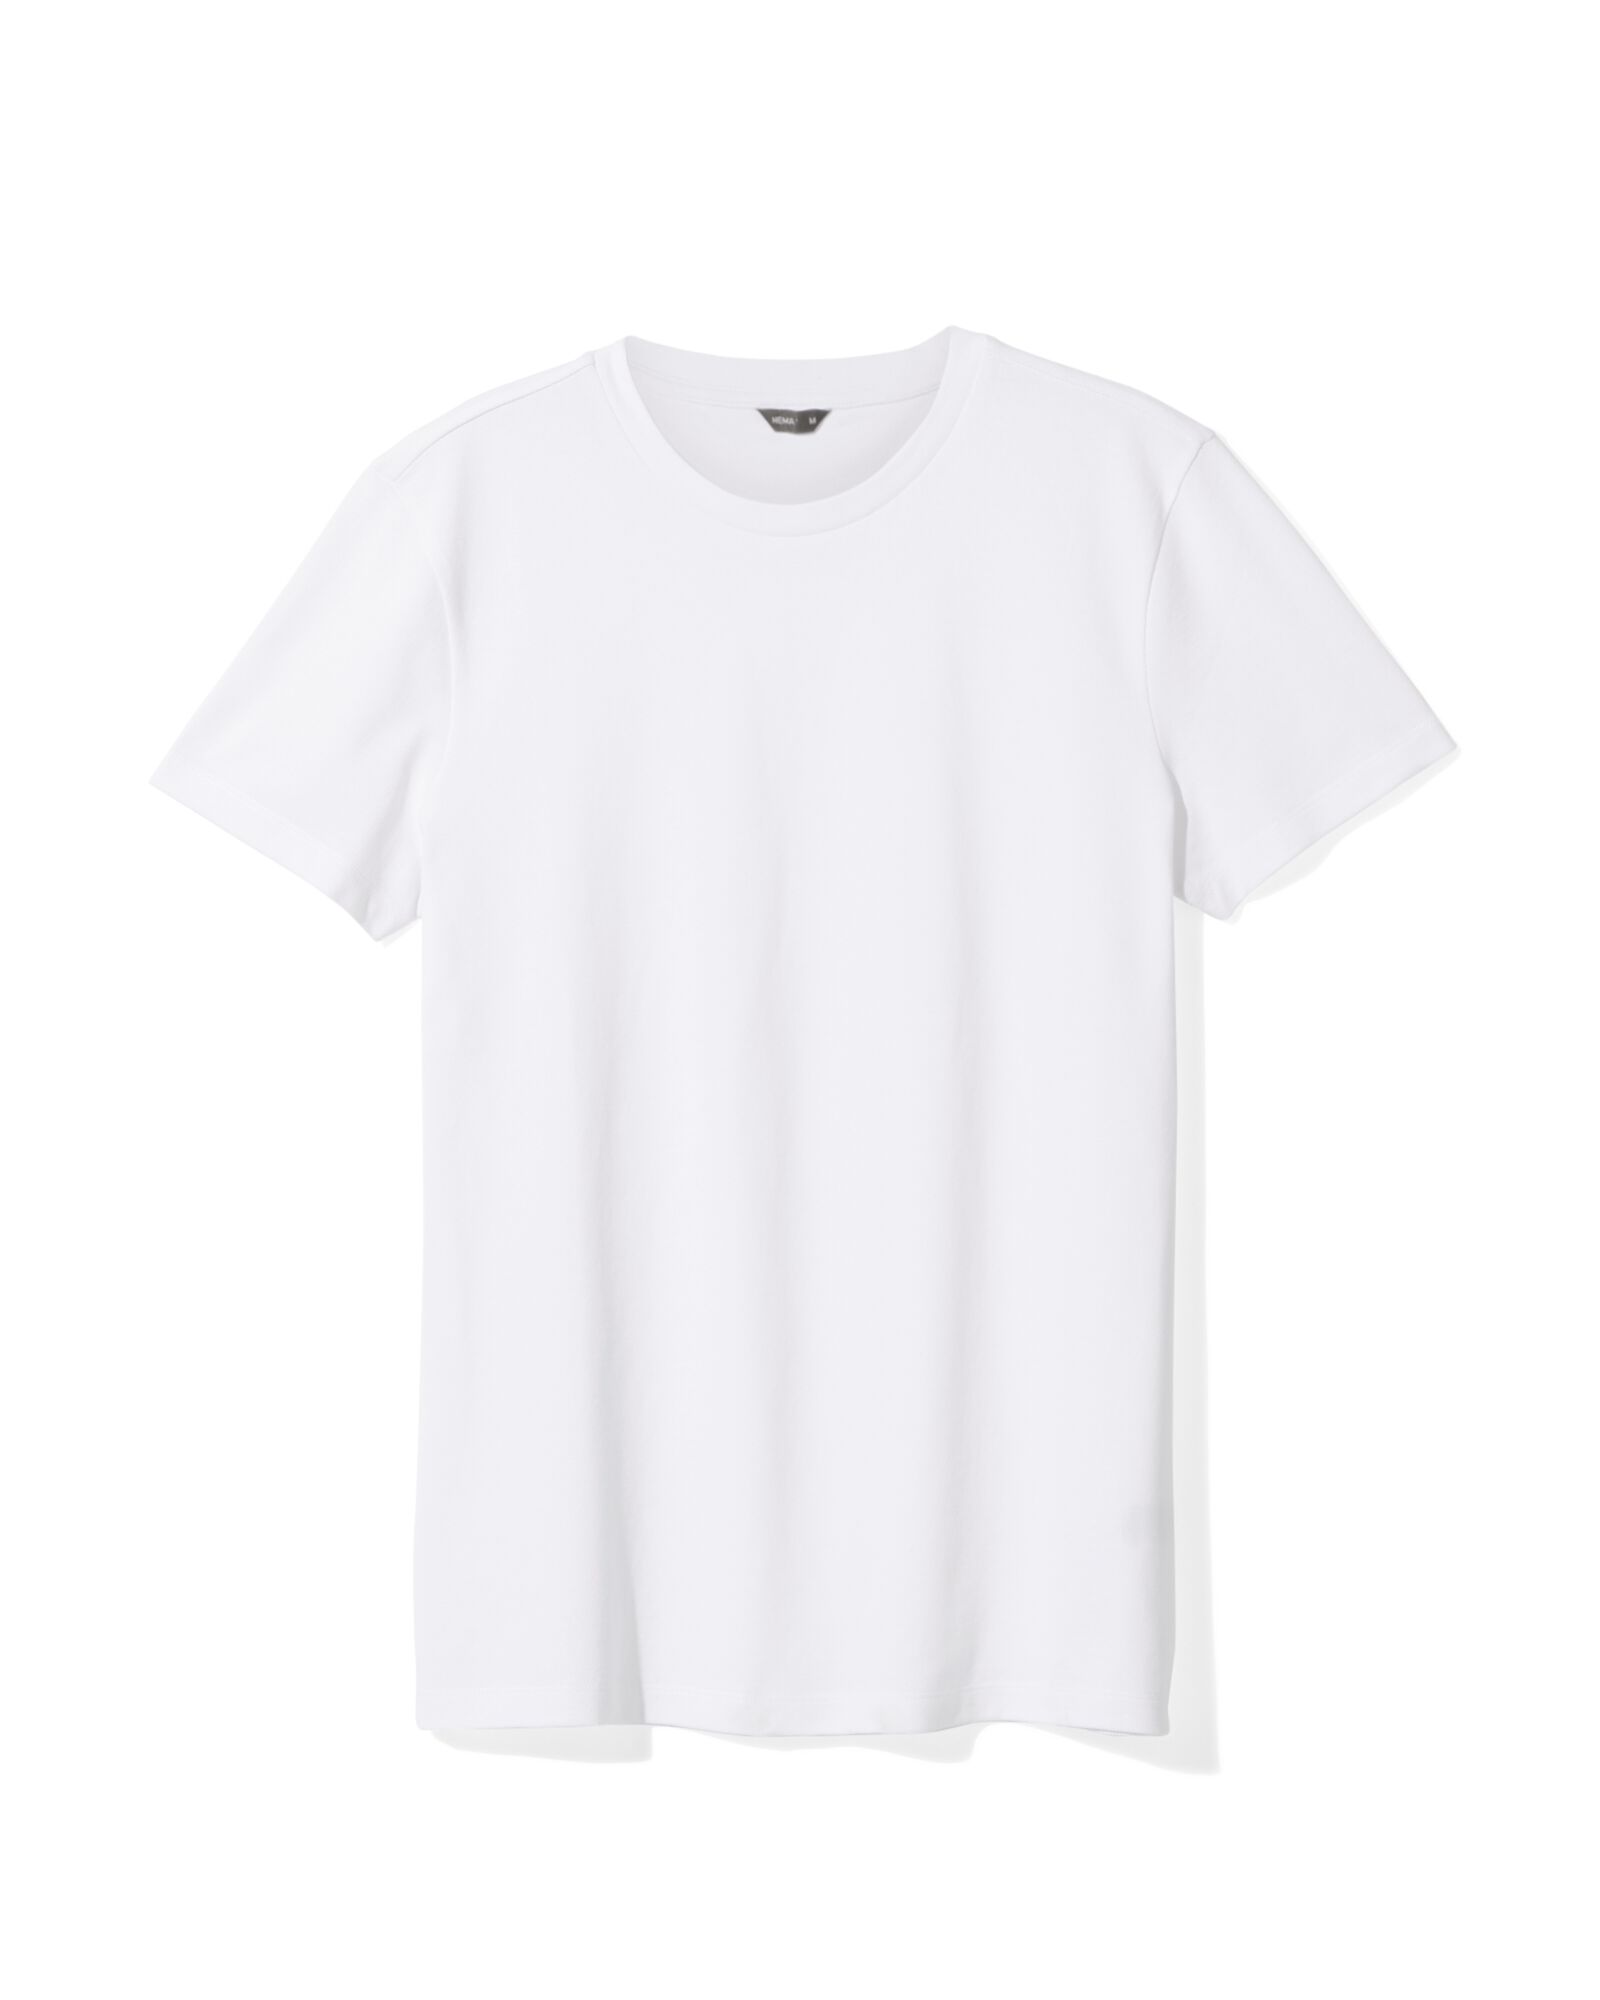 HEMA T-shirt Homme Piqué Blanc (blanc)